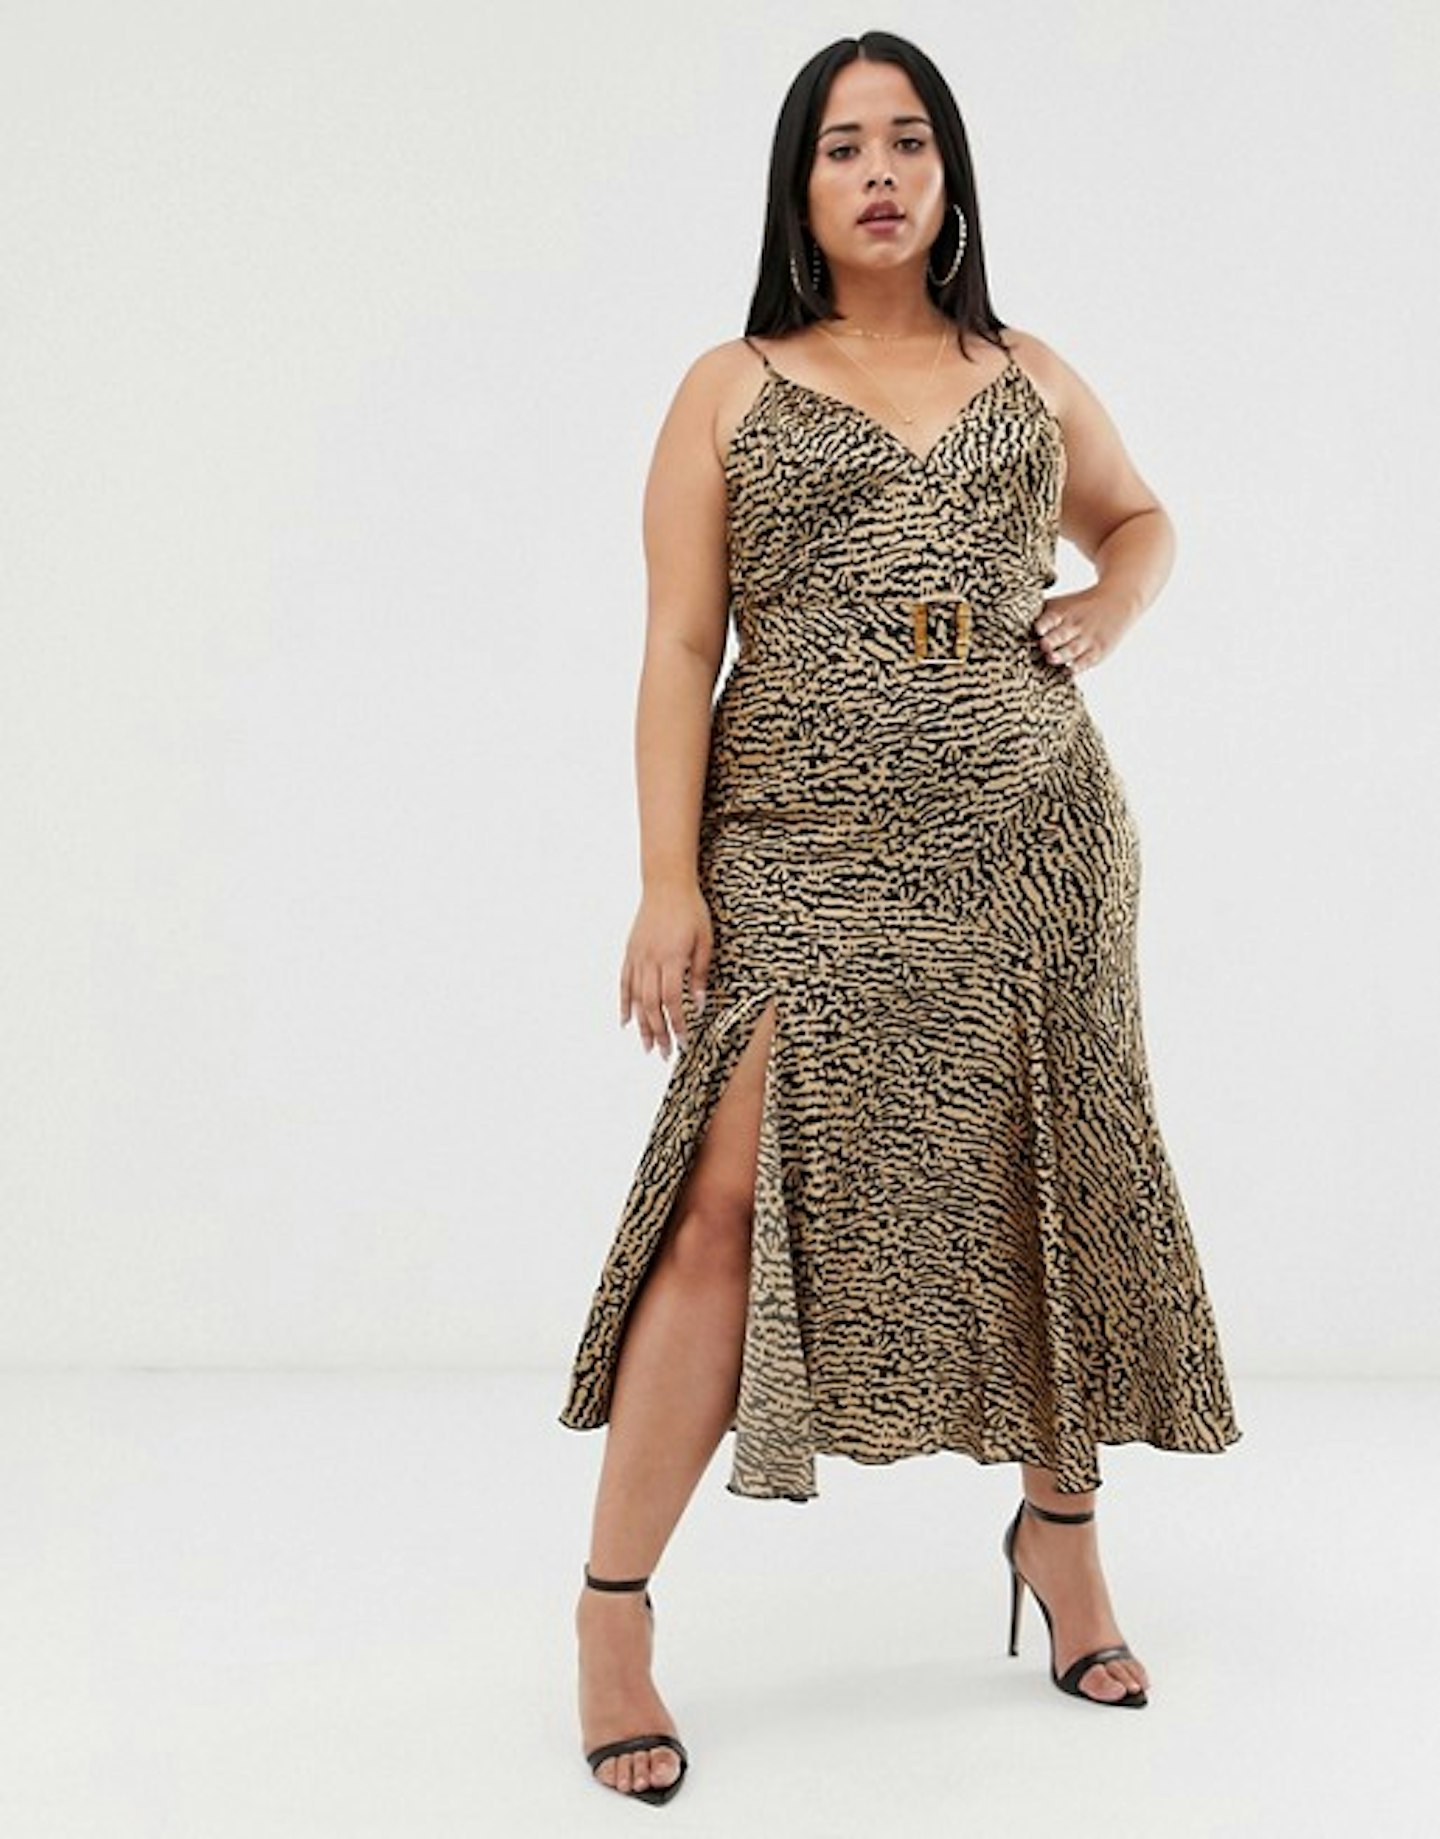 ASOS, Leopard Print Slip Dress, £35